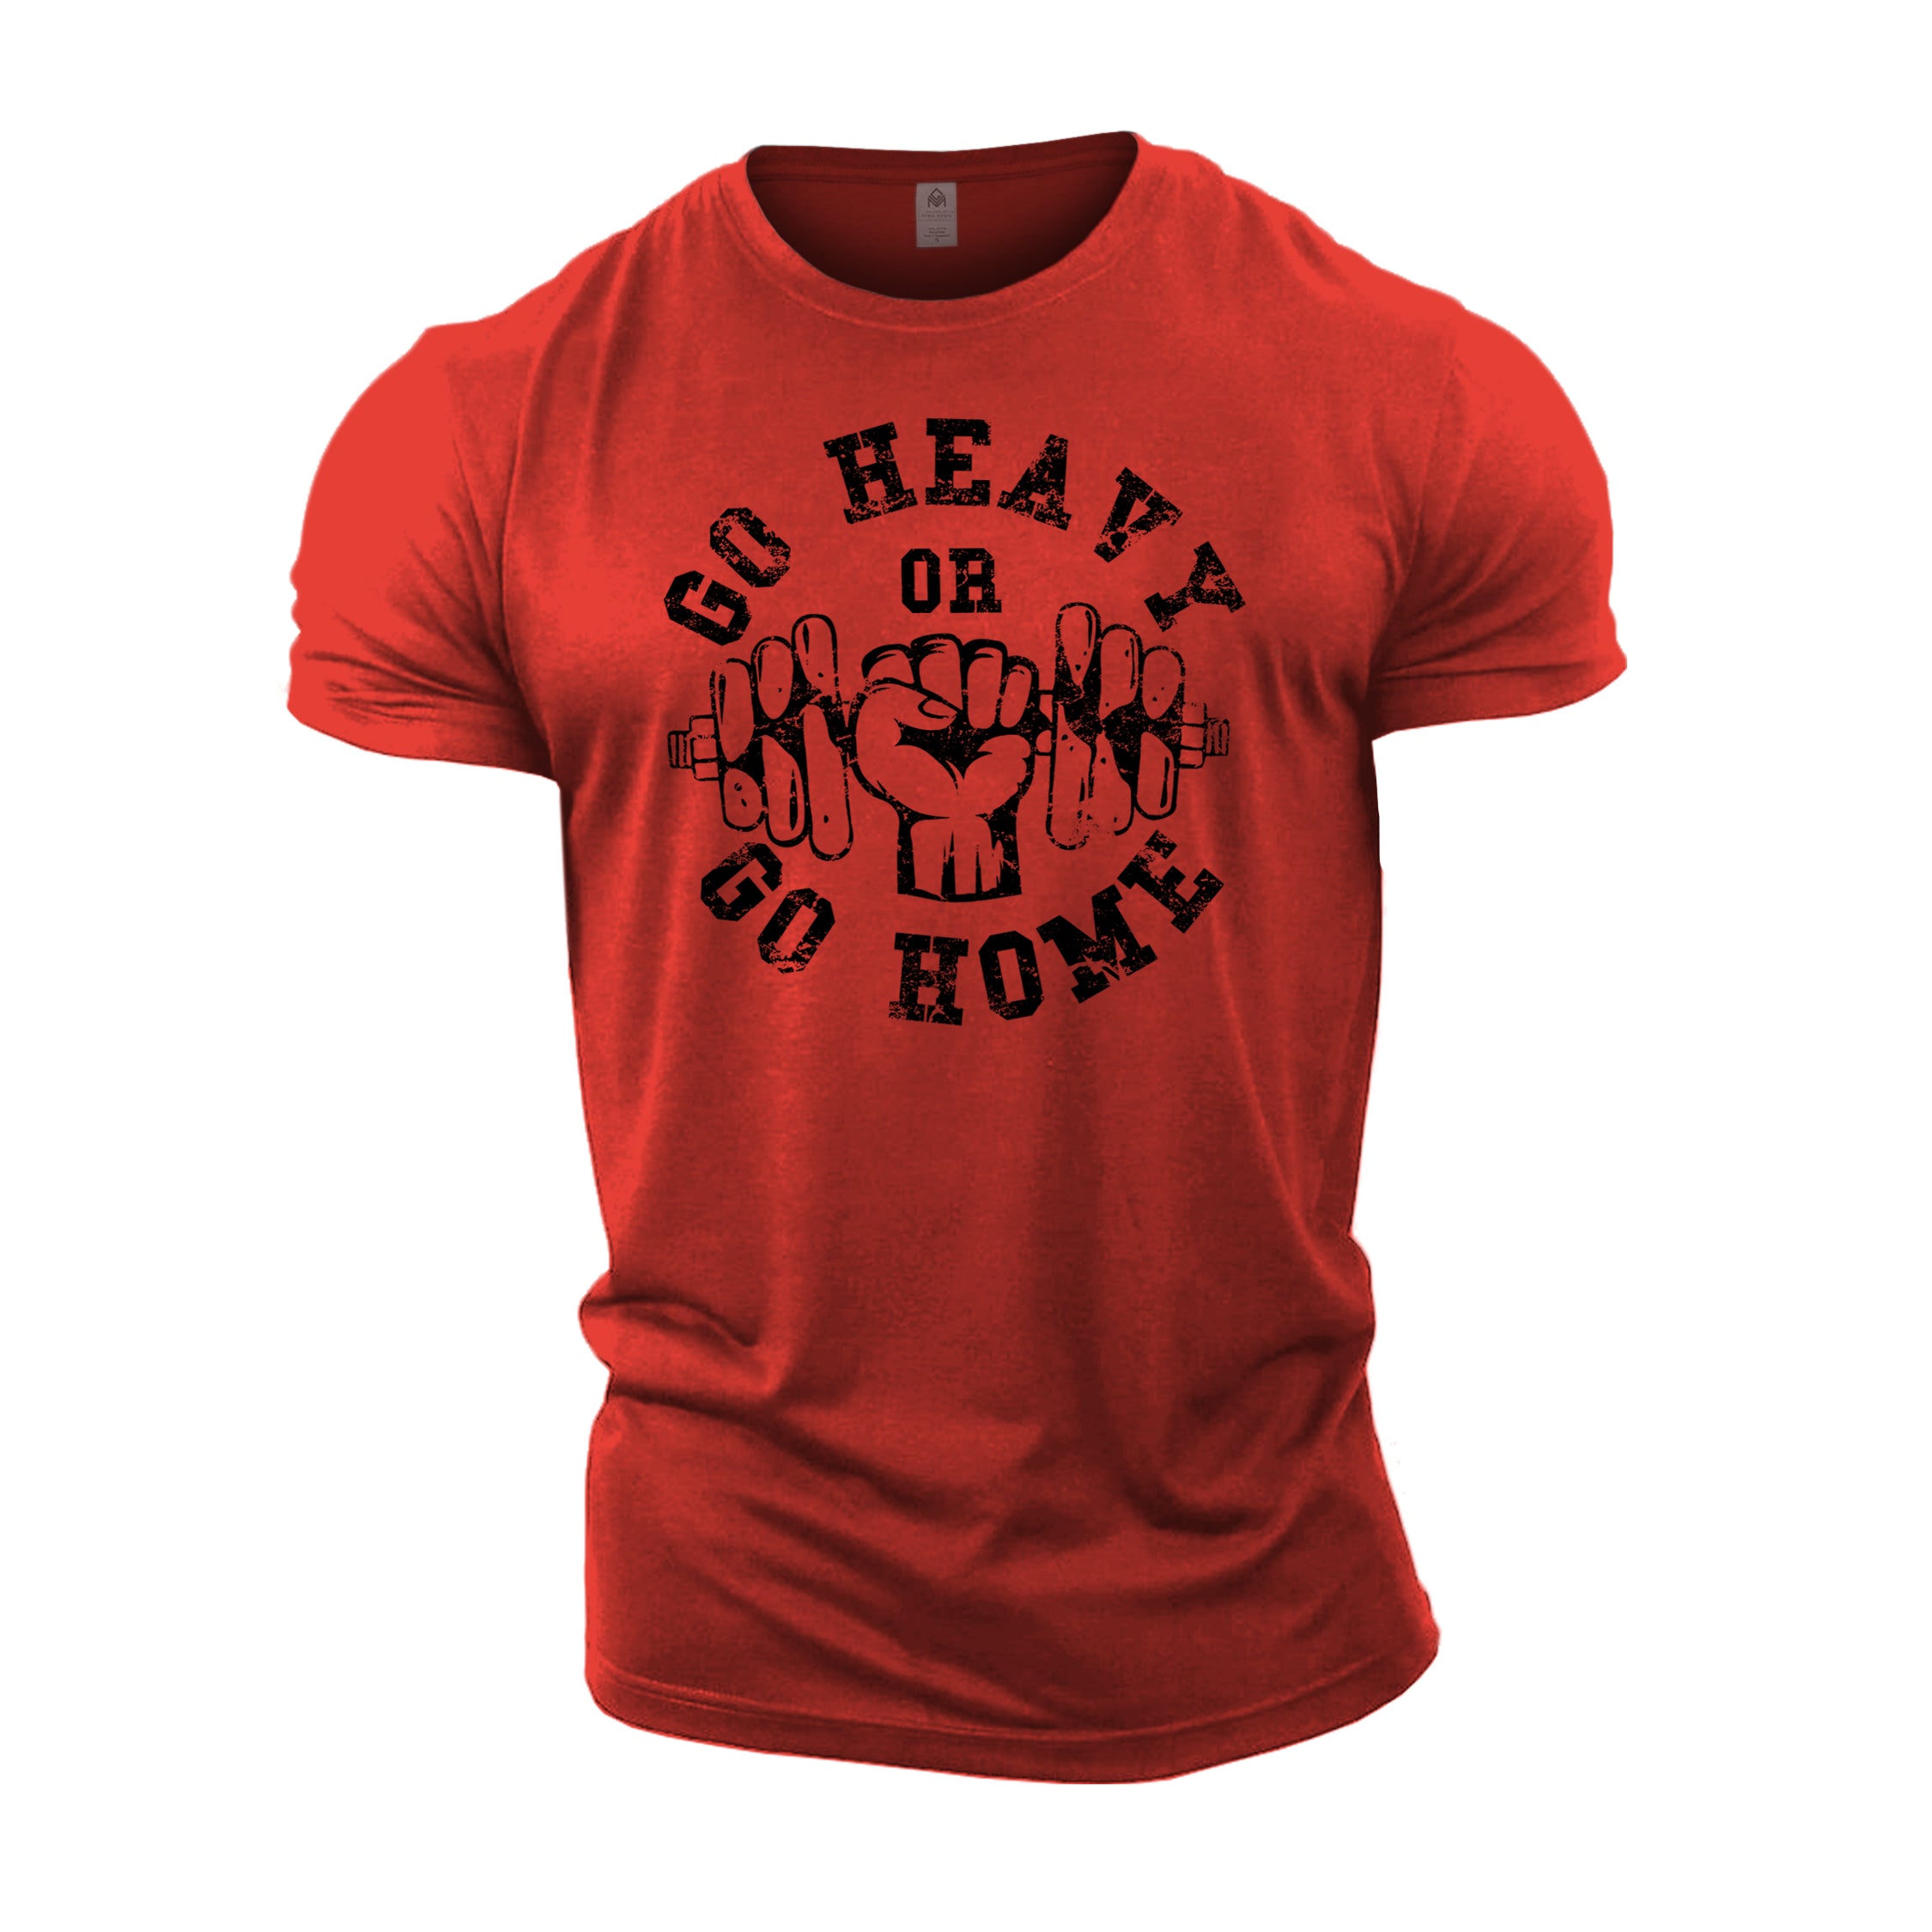 Go Heavy Or Go Home - Gym T-Shirt